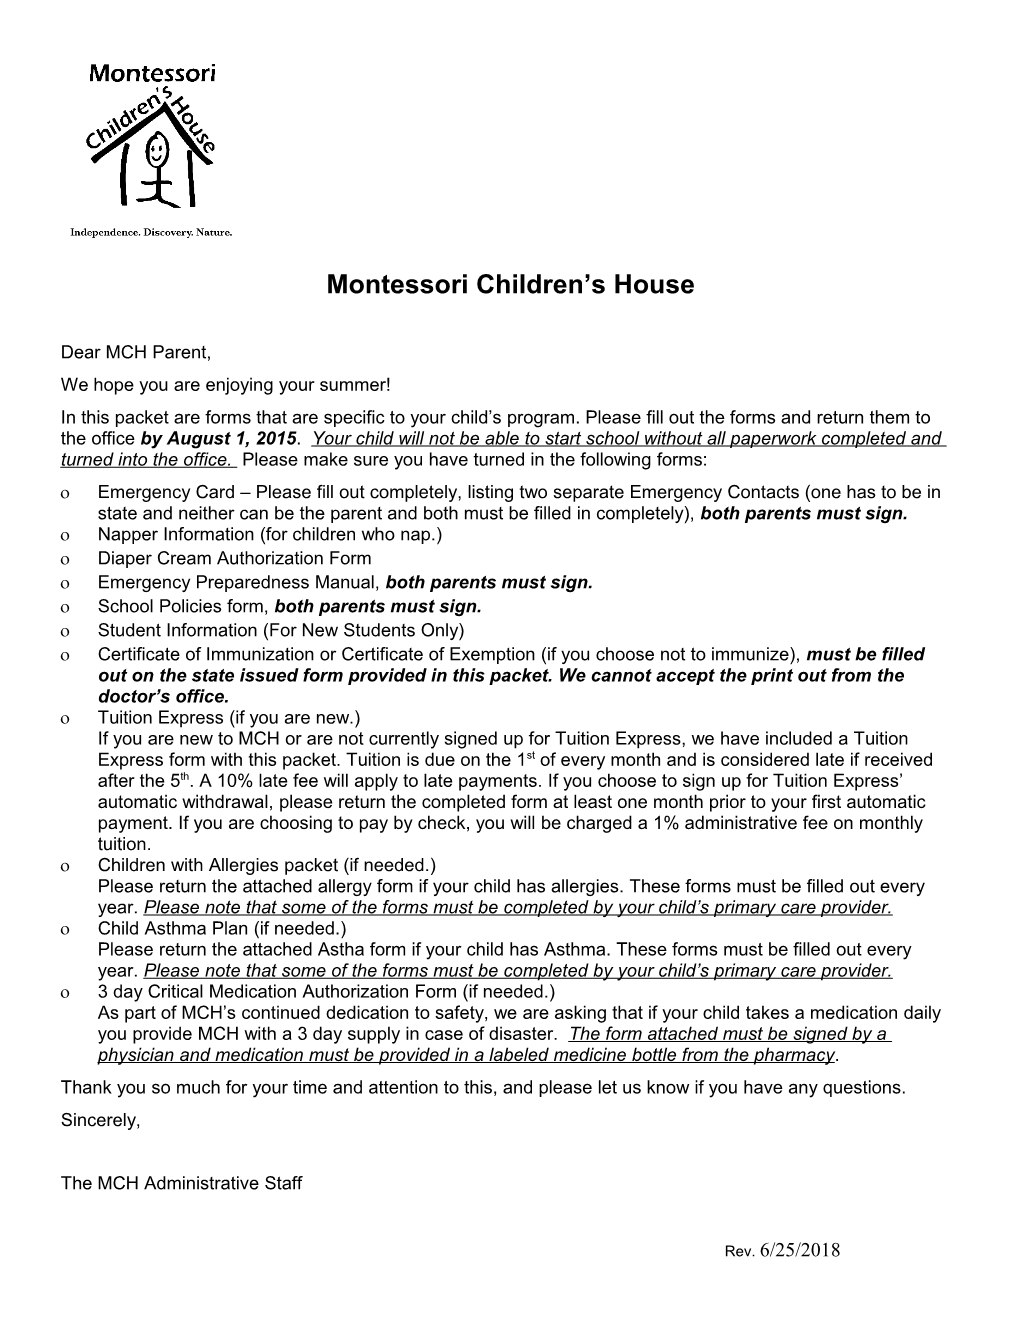 Montessori Children S House